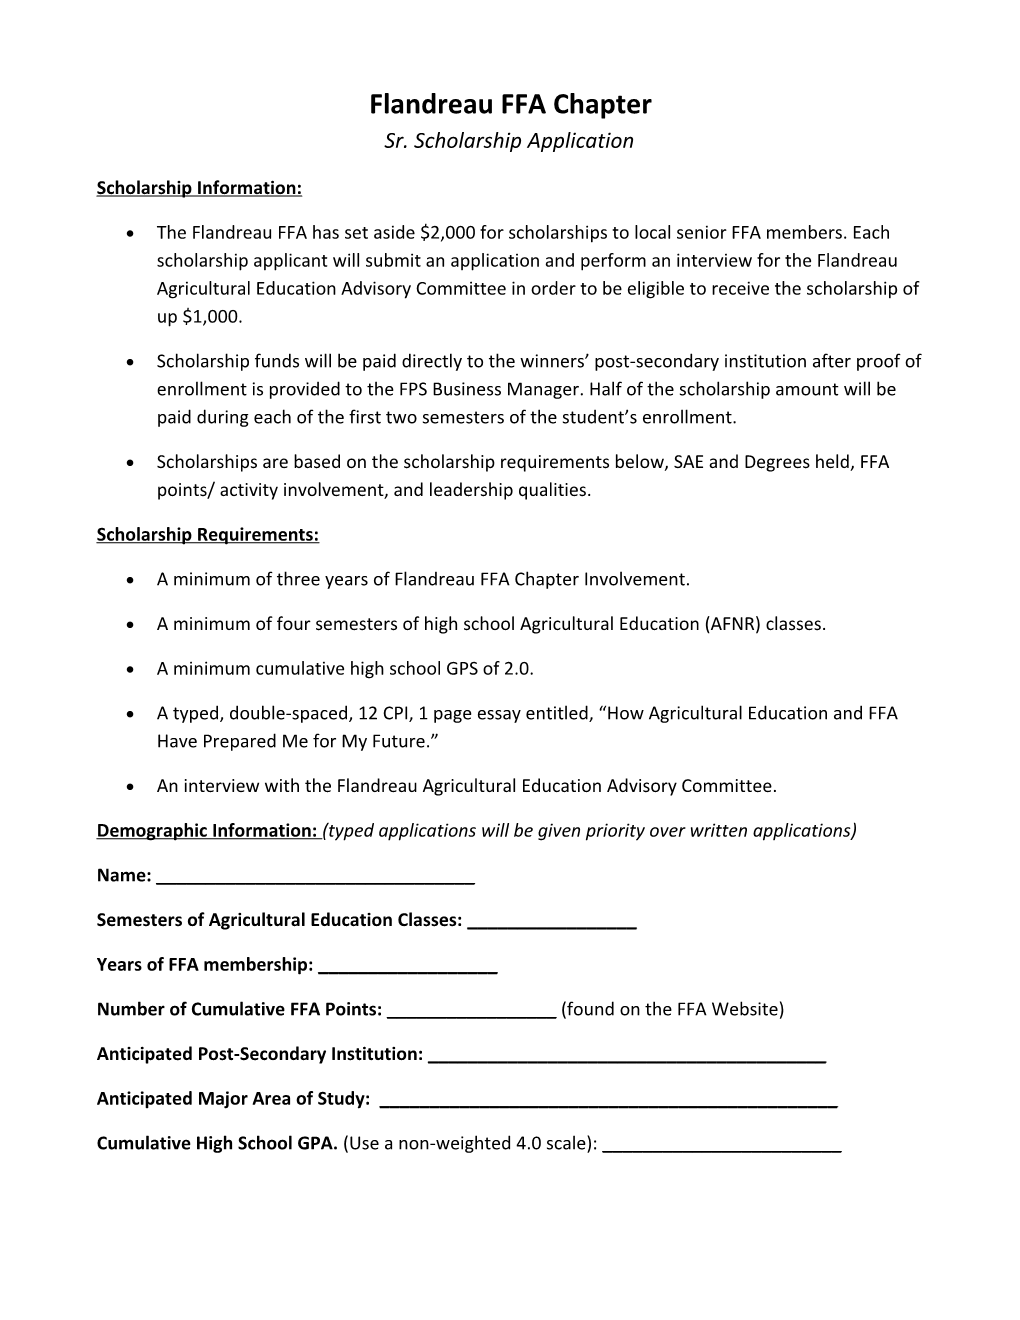 Flandreau FFA Chapter Sr. Scholarship Application